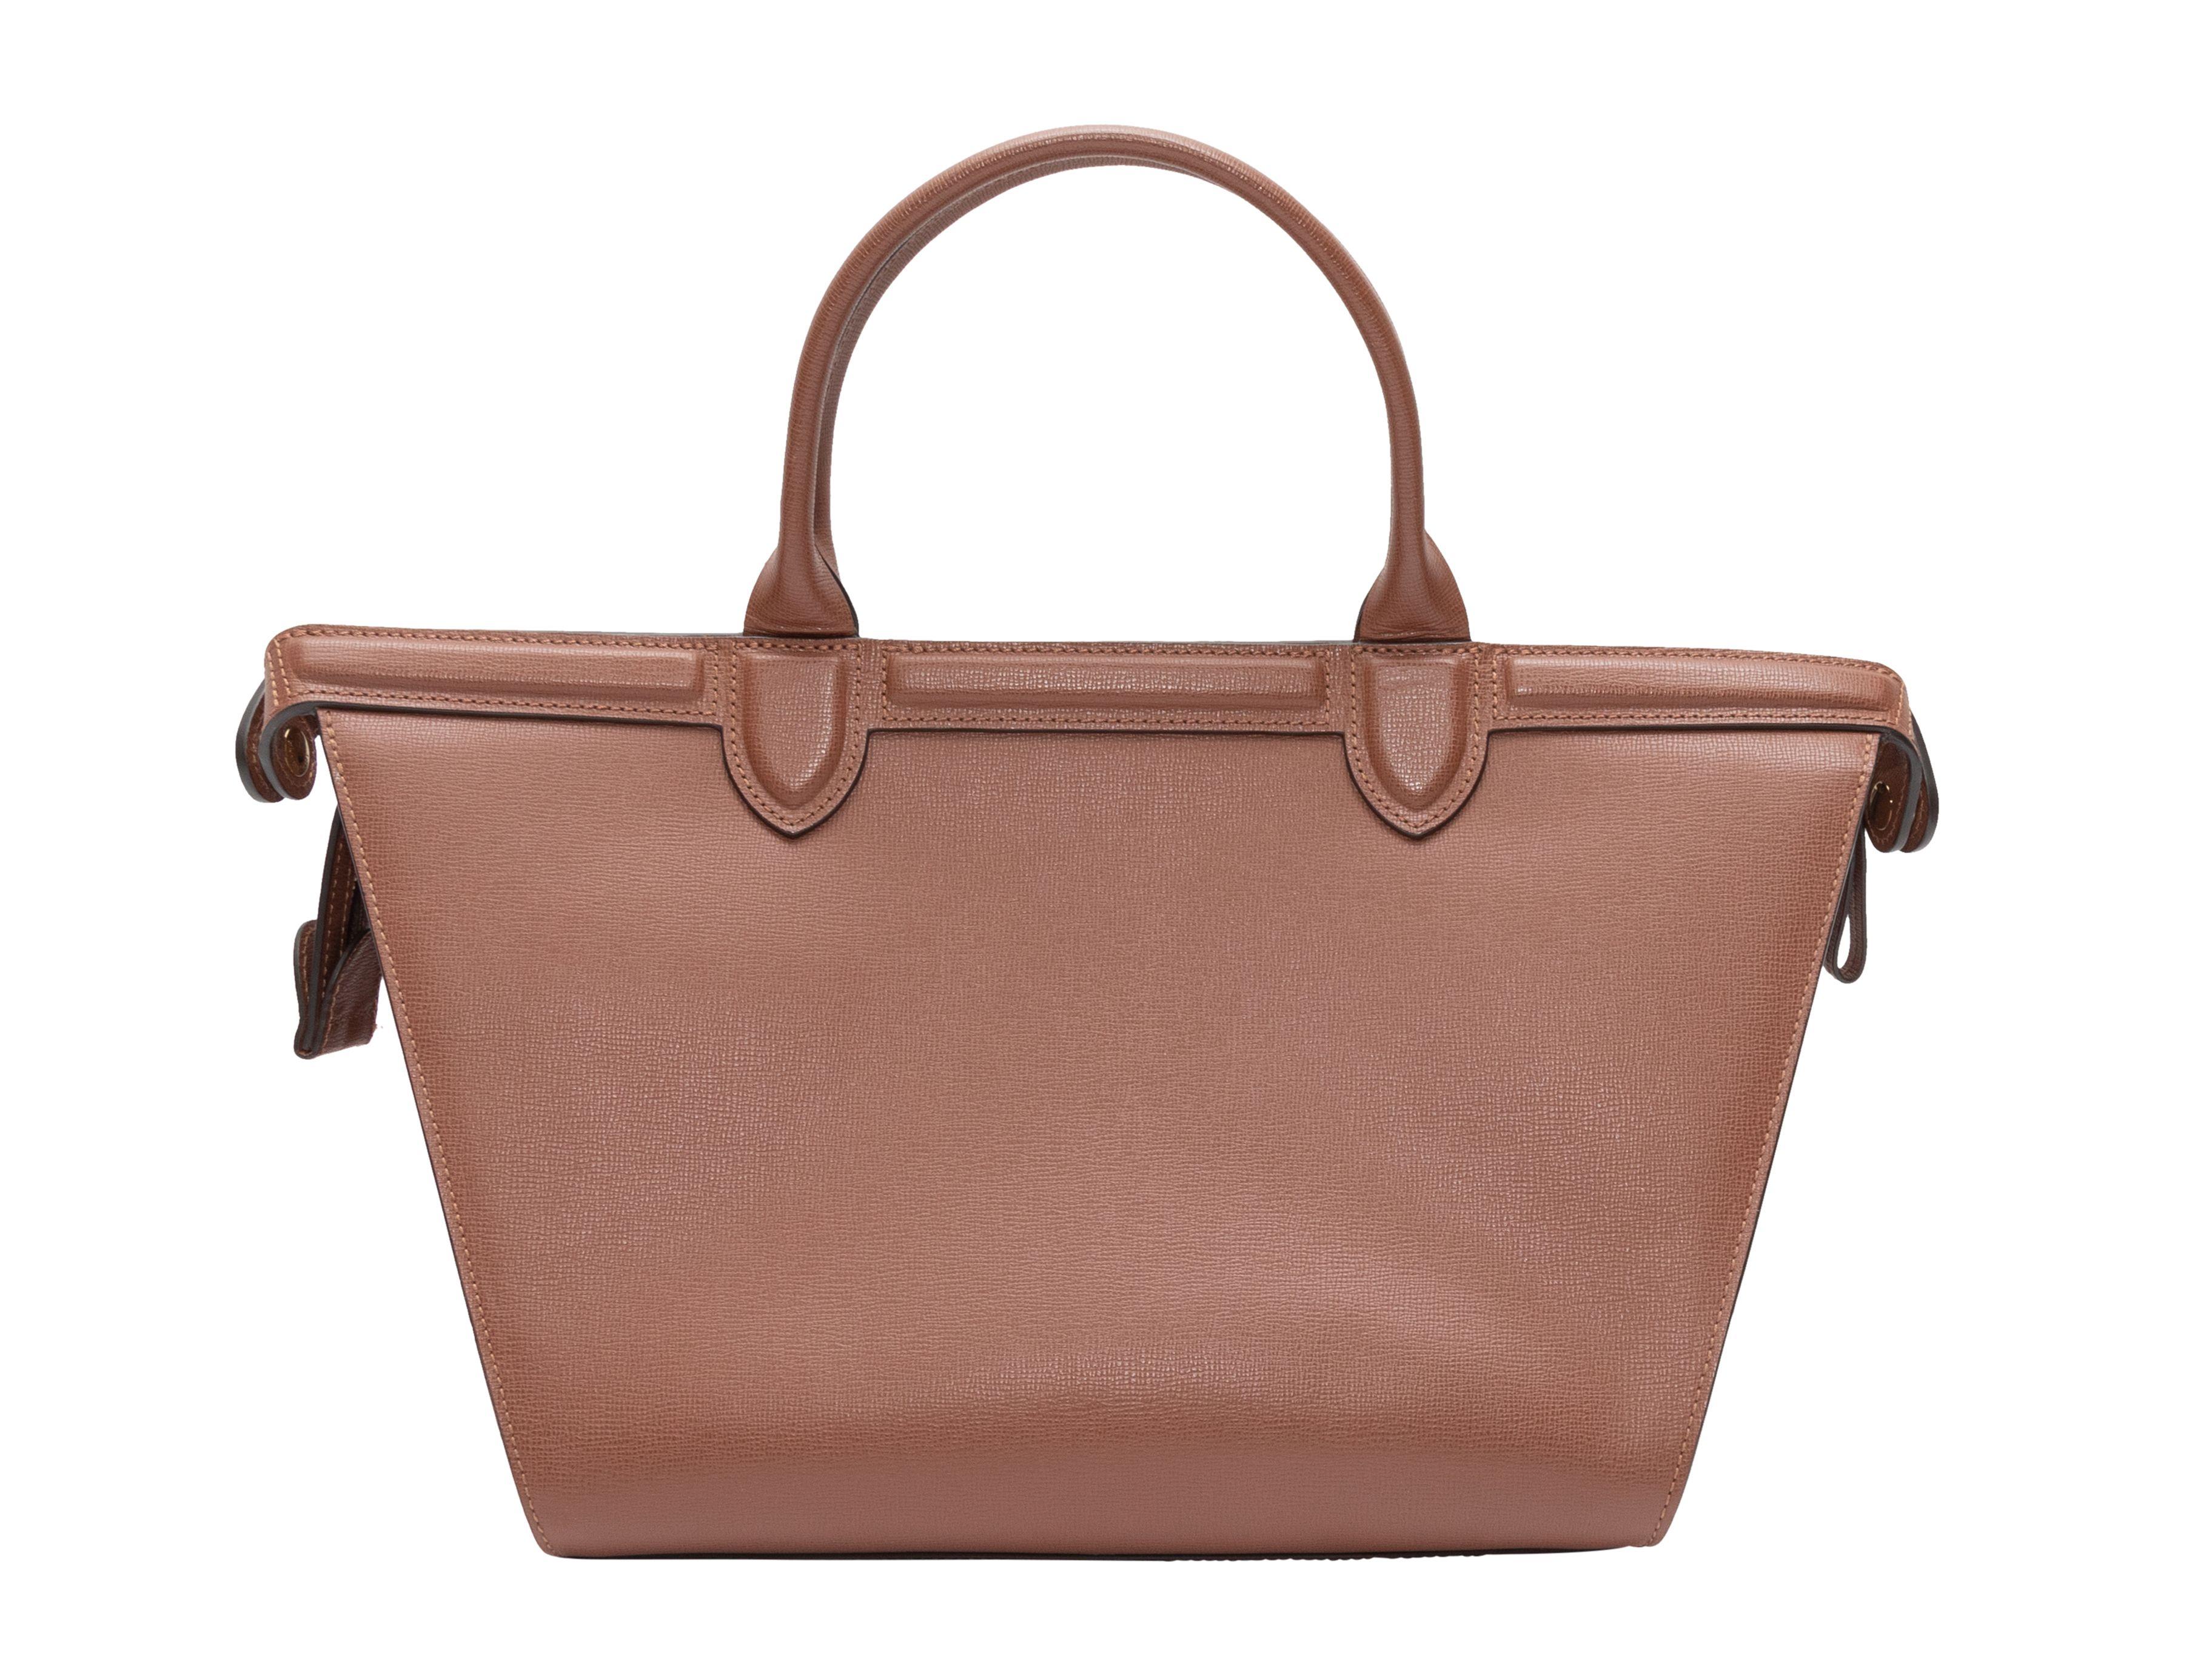 Longchamp Brown Leather Tote Bag 2